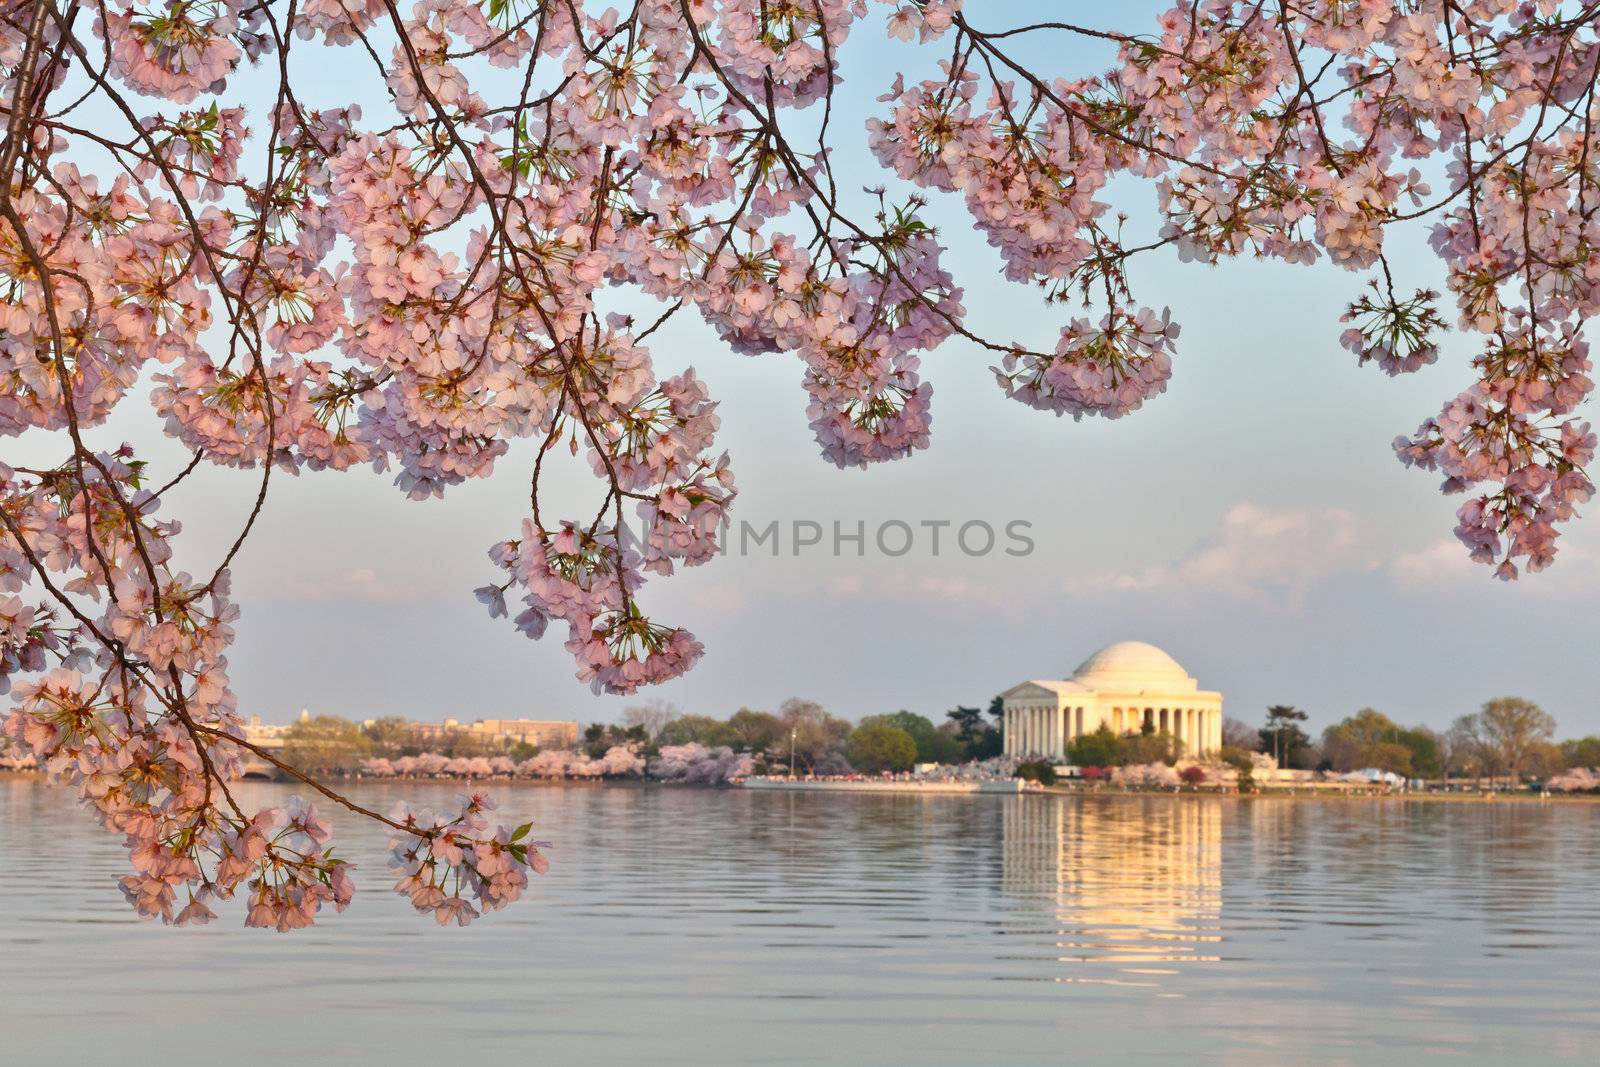 Washington DC Jefferson Memorial Framed by Cherry Blossoms by DashaRosato